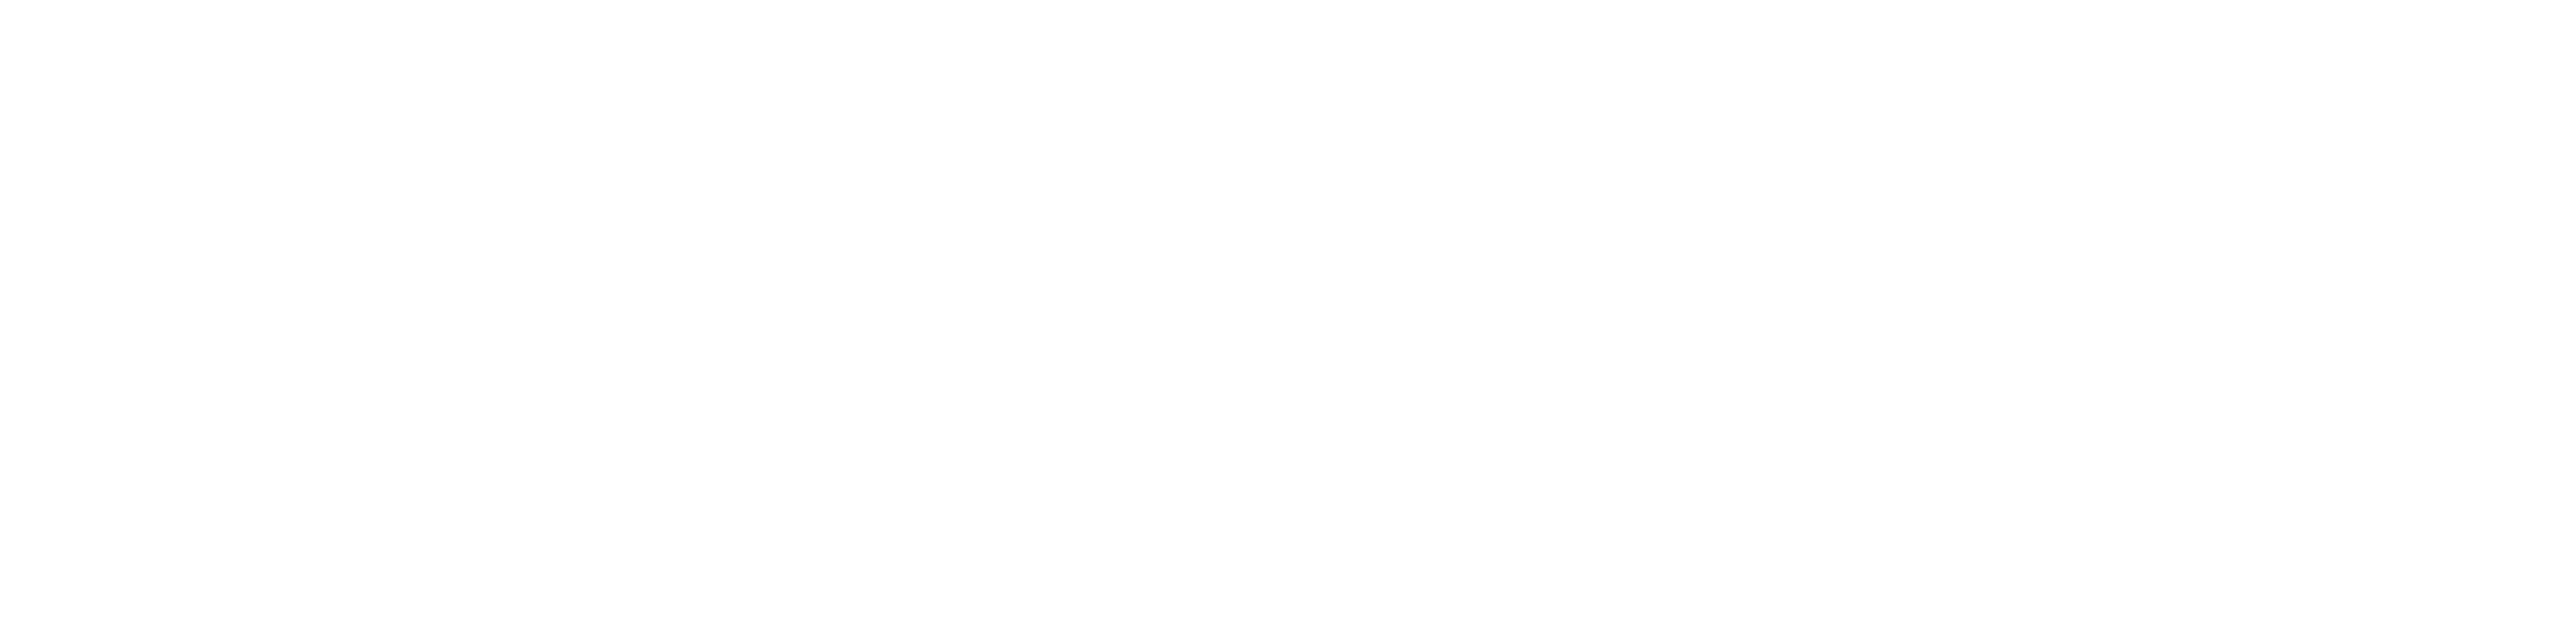 Balubaid